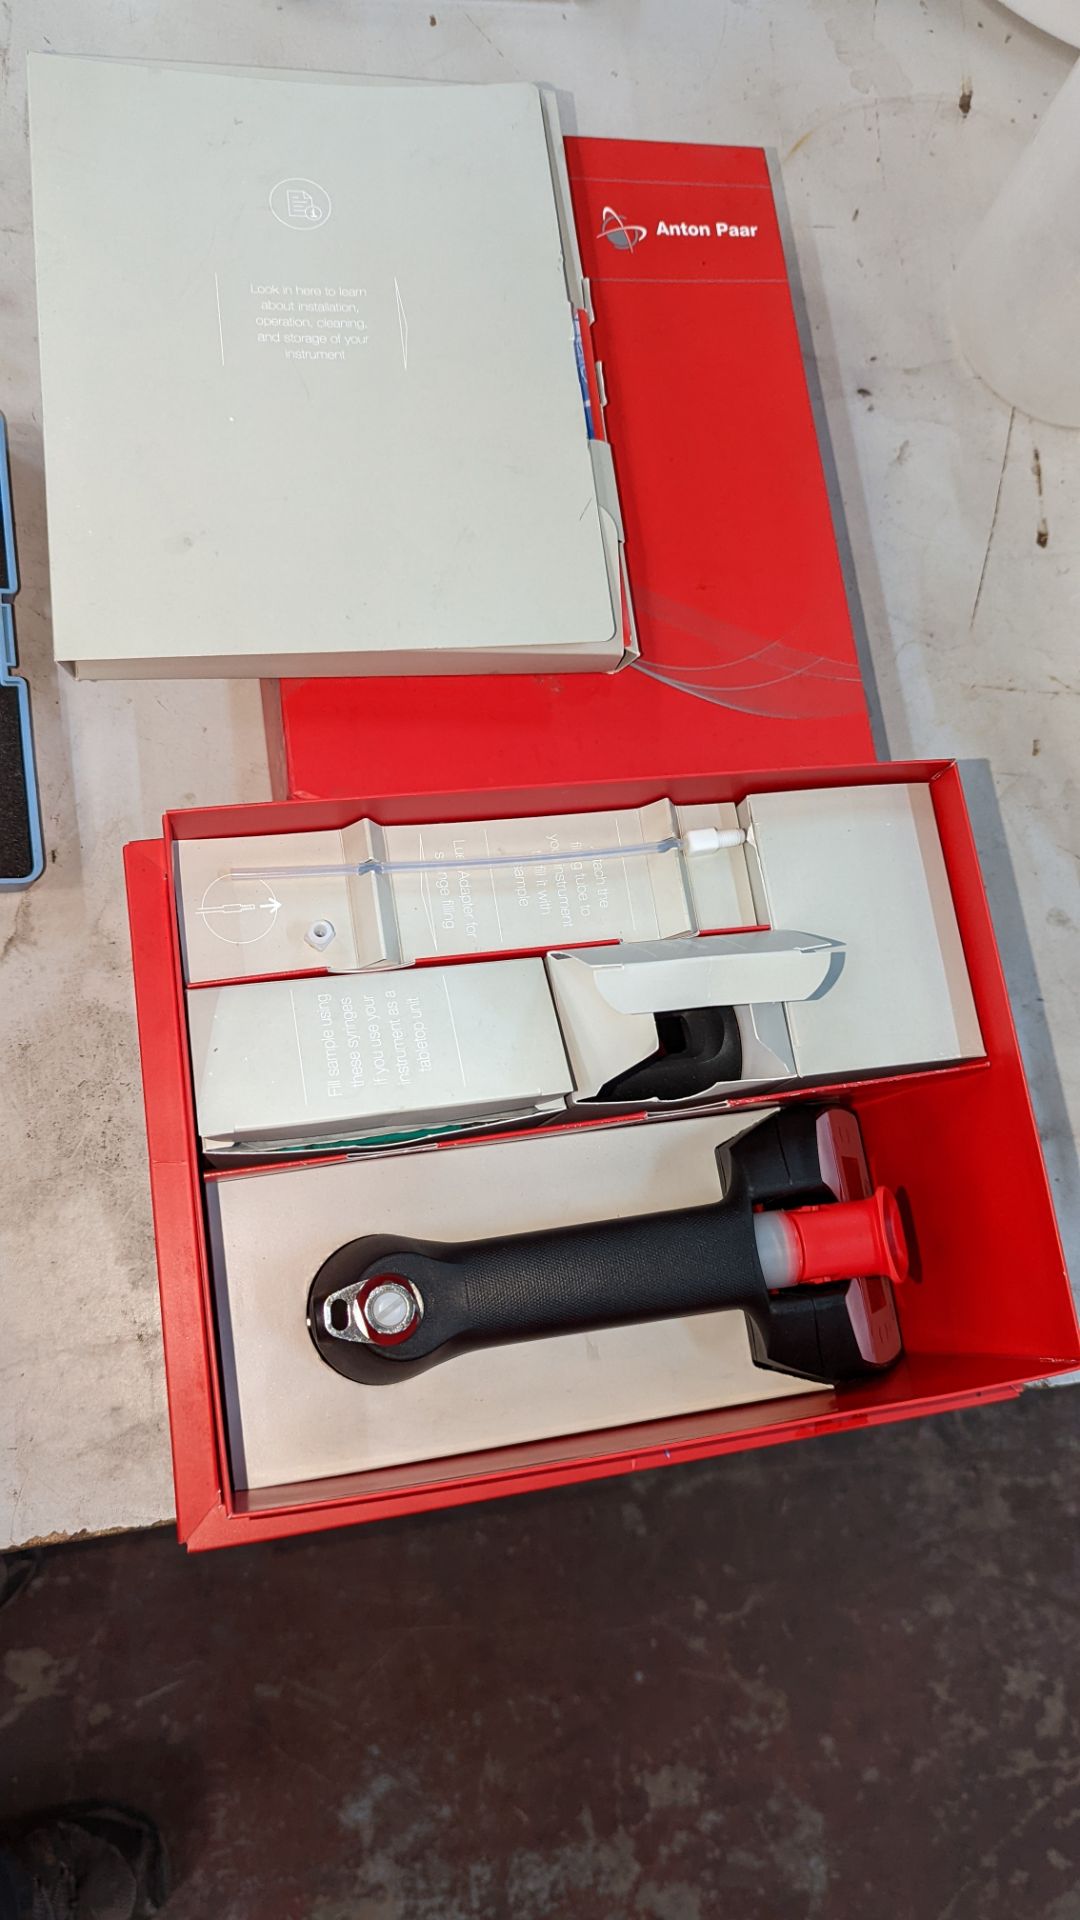 Anton Paar Snap 41 portable alcohol meter/digital hydrometer including box, manual & ancillaries - Image 7 of 7